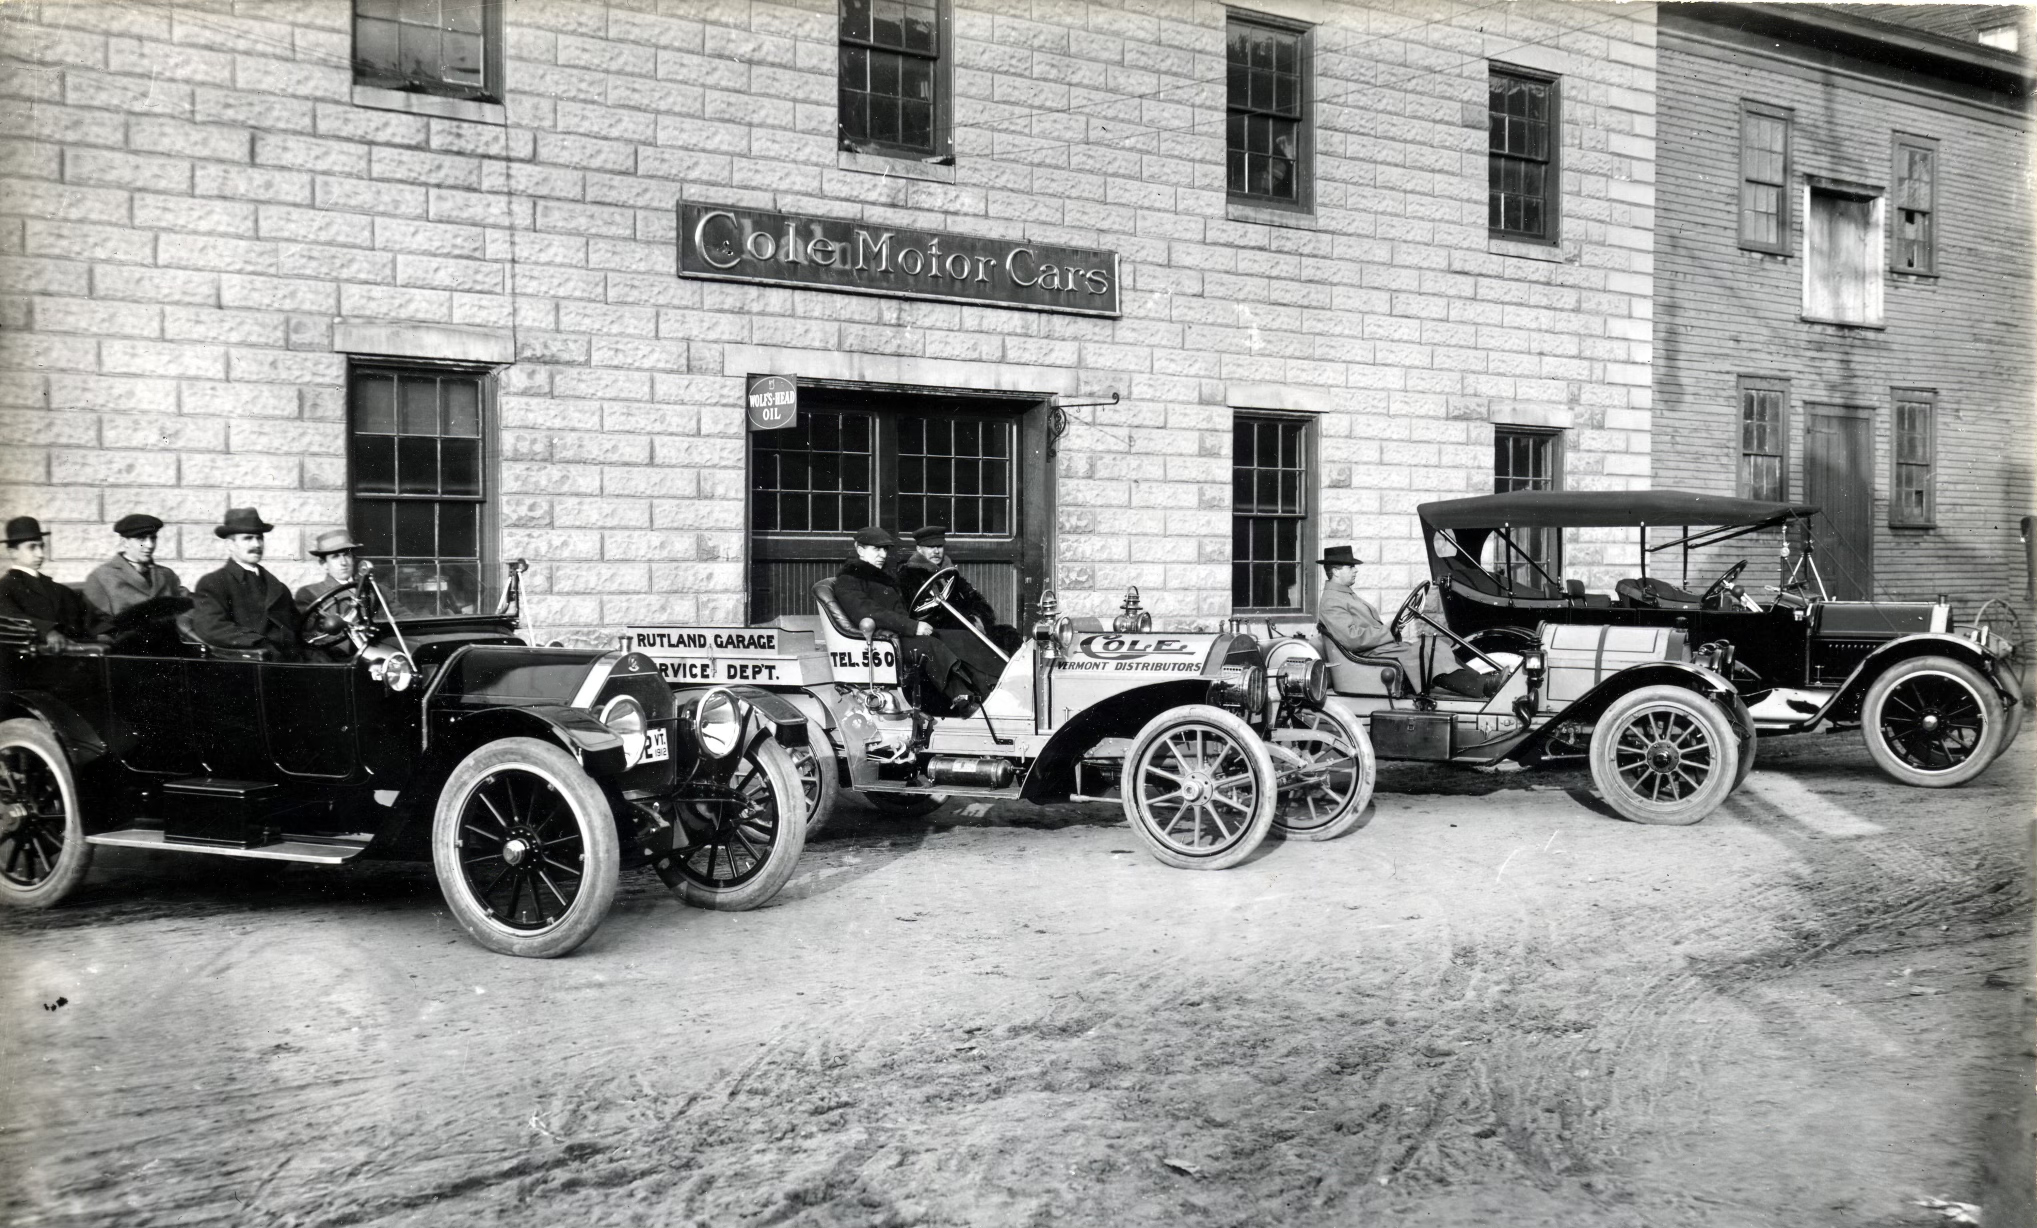 Cole Motor Cars Rutland Vermont